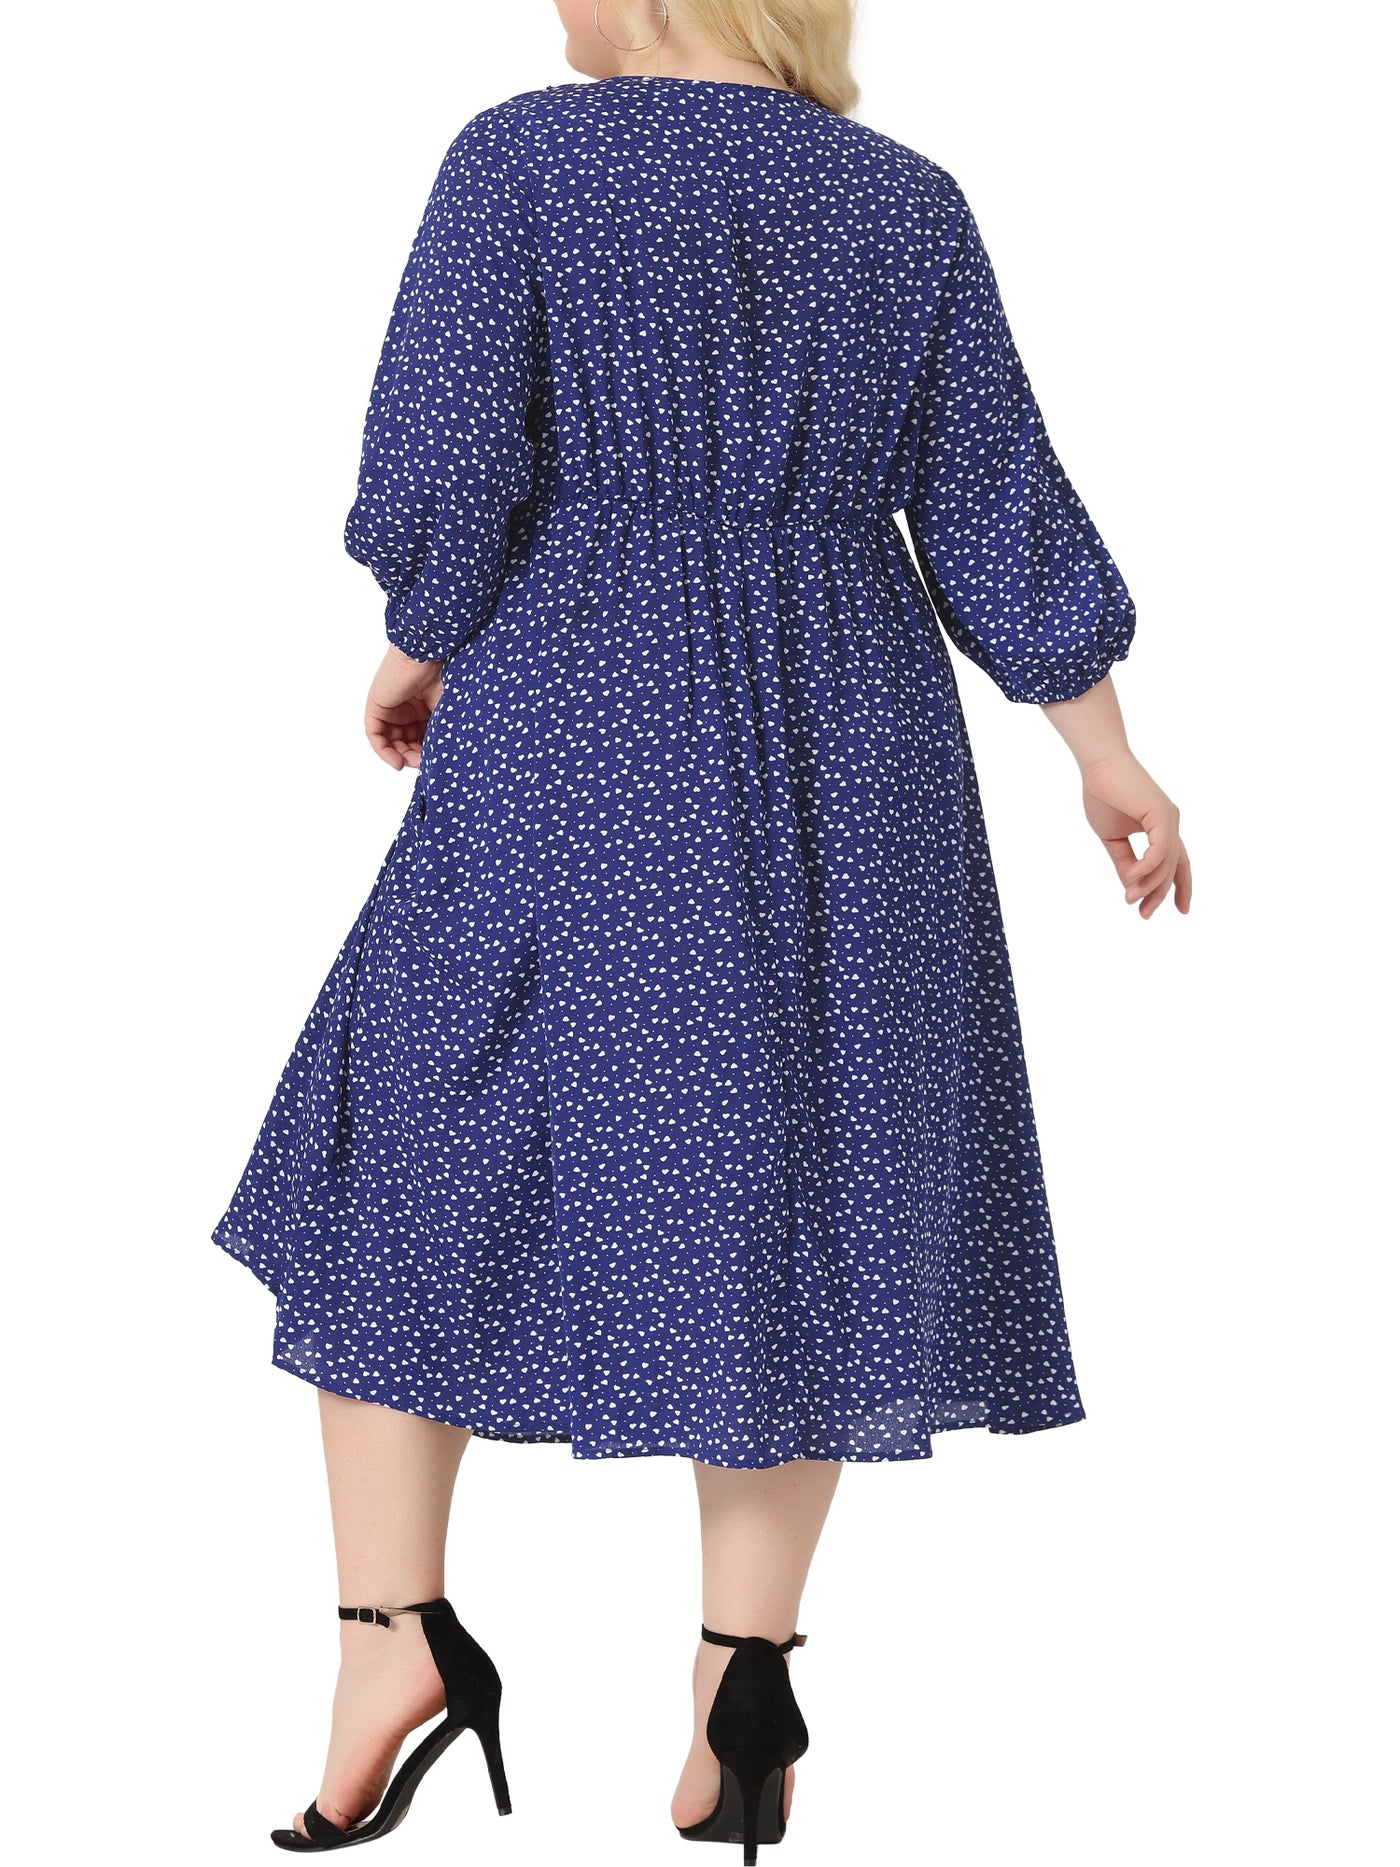 Bublédon Plus Size Dress for Women Casual Elbow Sleeve Sweetheart Print Midi Ruffle Dresses